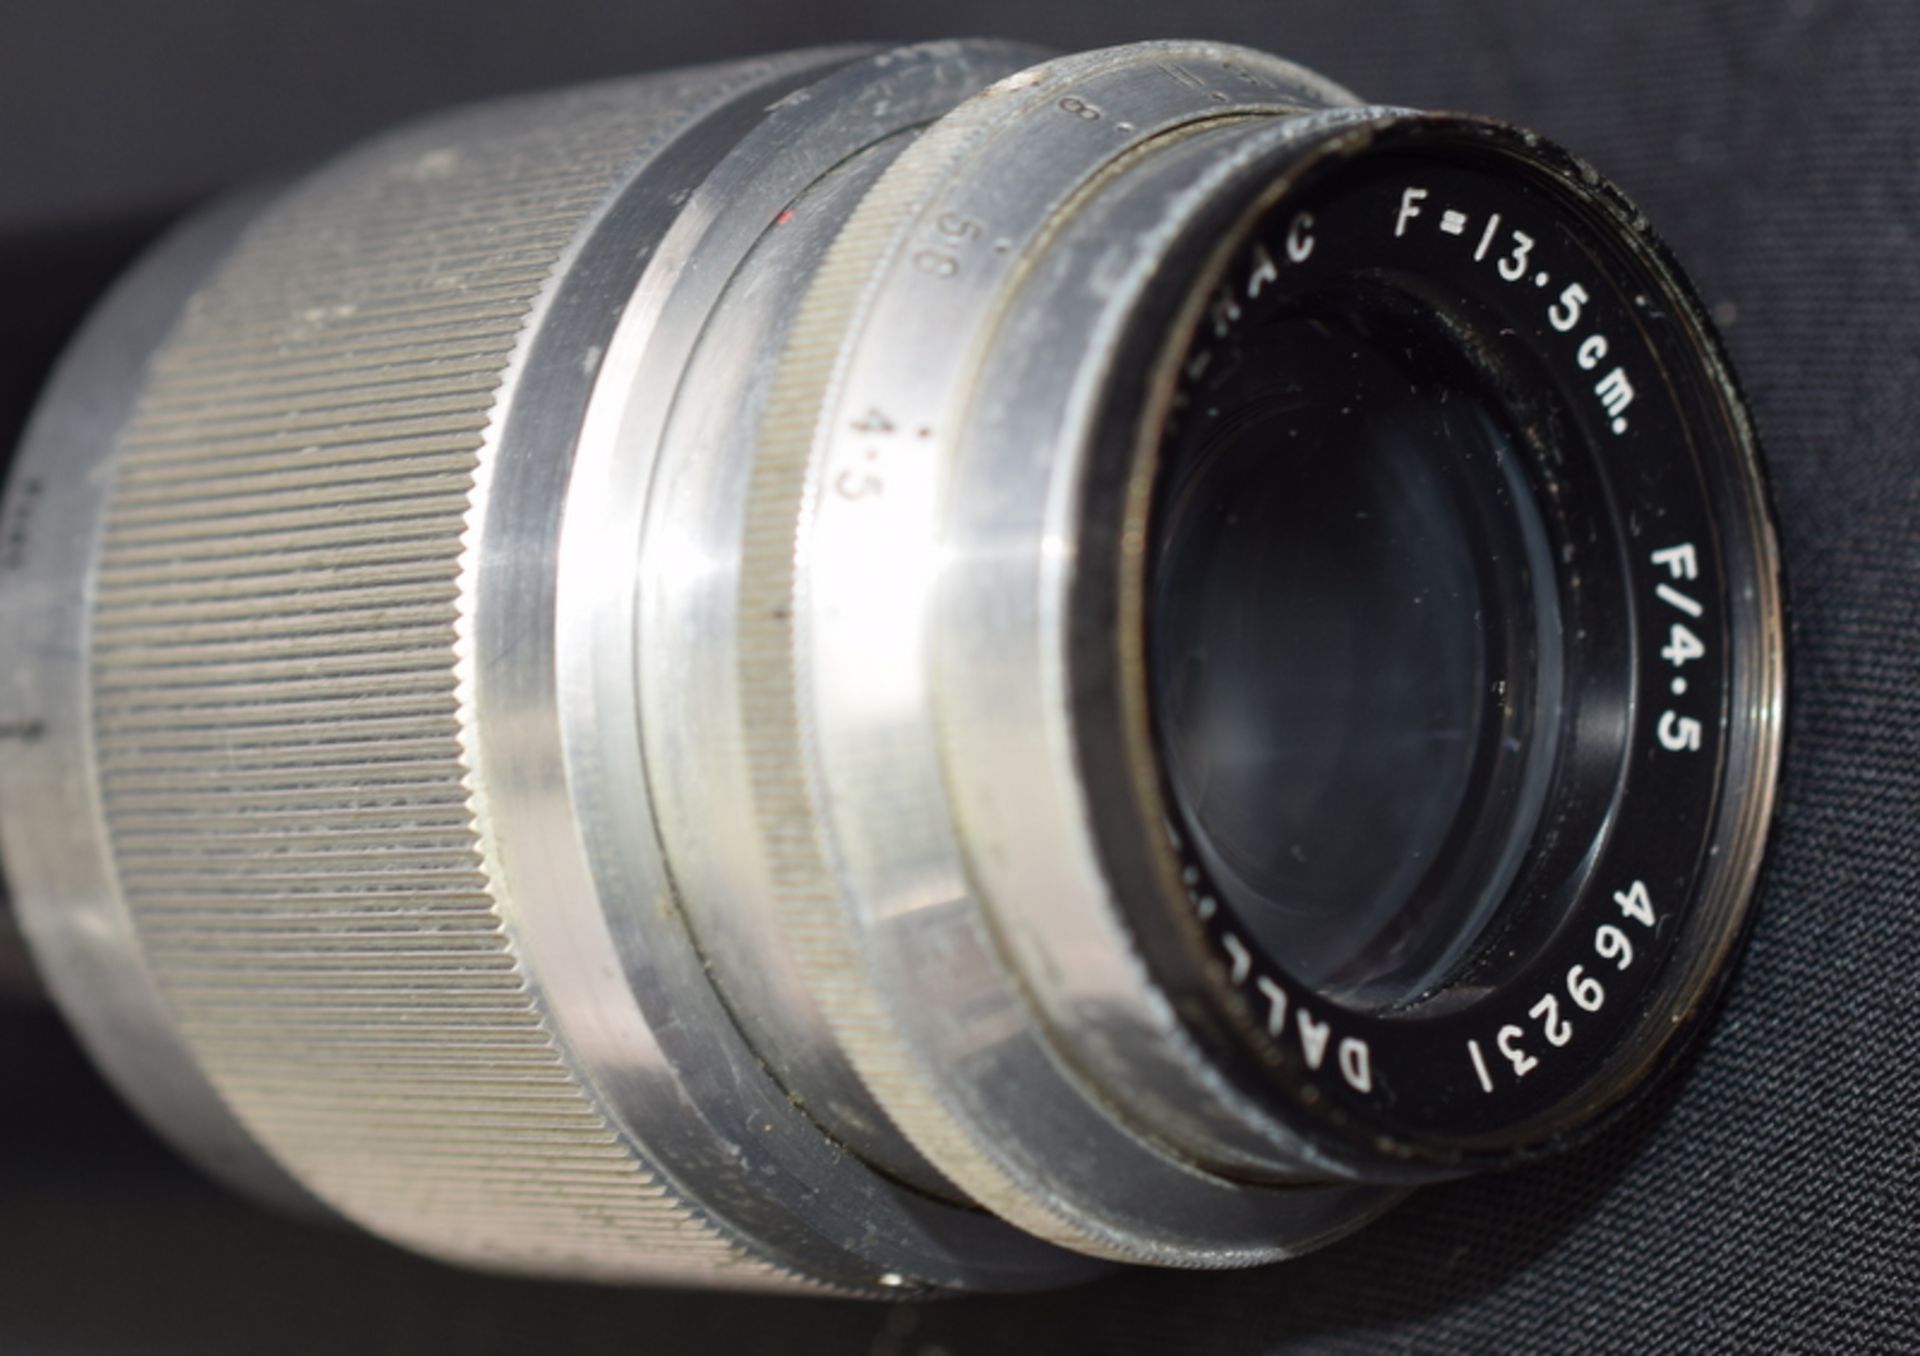 Dallmeyer Dalrac F = 13,5cm f/4.5 Lens for Leica M42 Screw Mount - Image 5 of 6